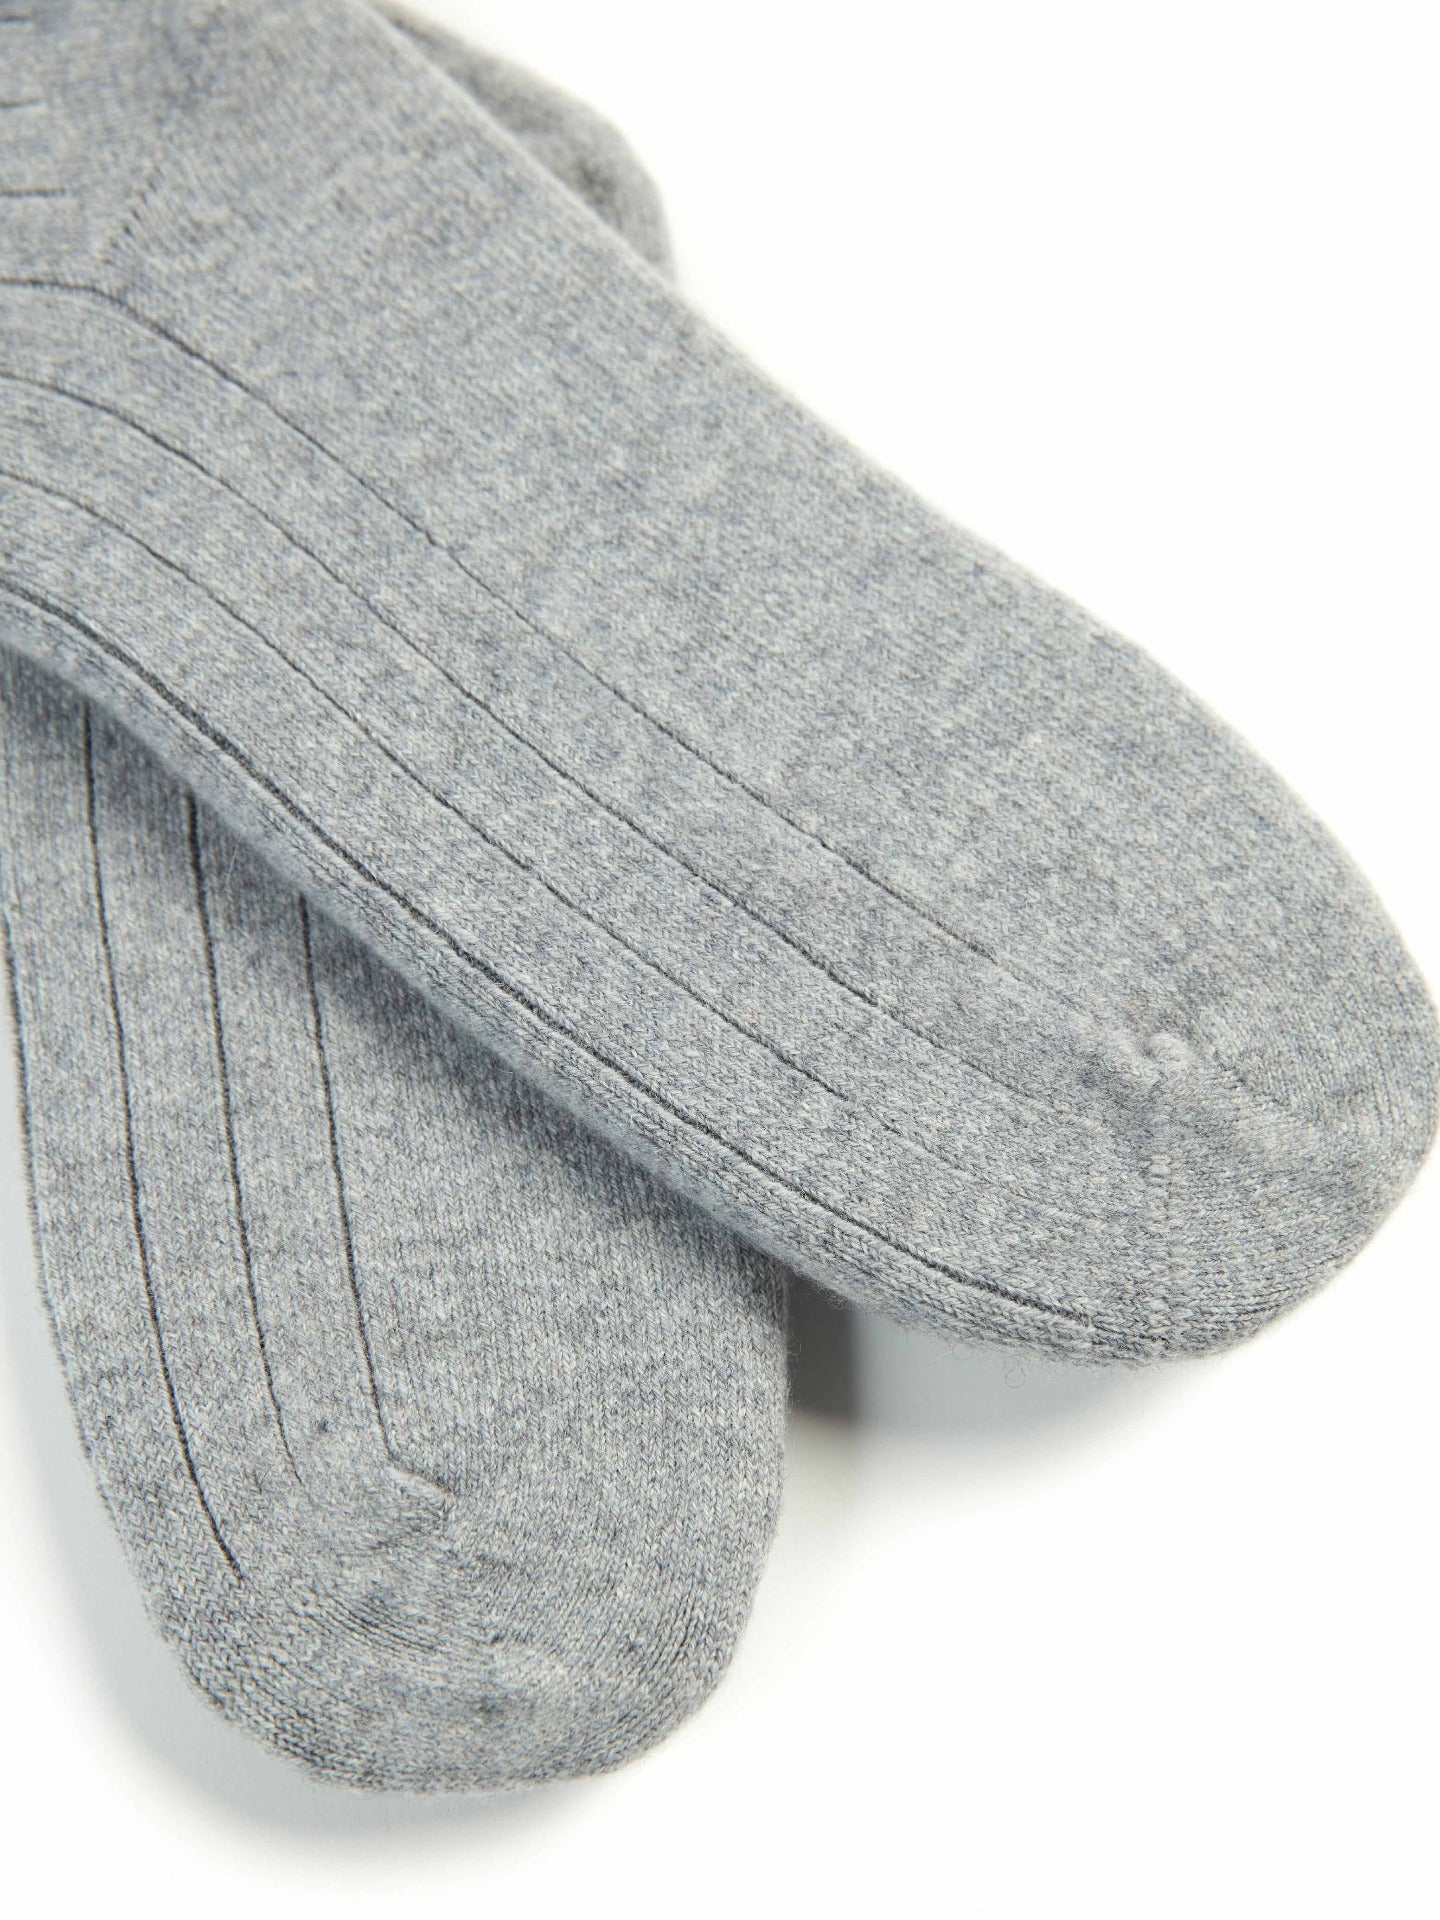 Unisex Cashmere Trim Knit Bed Socks Vapor Blue - Gobi Cashmere